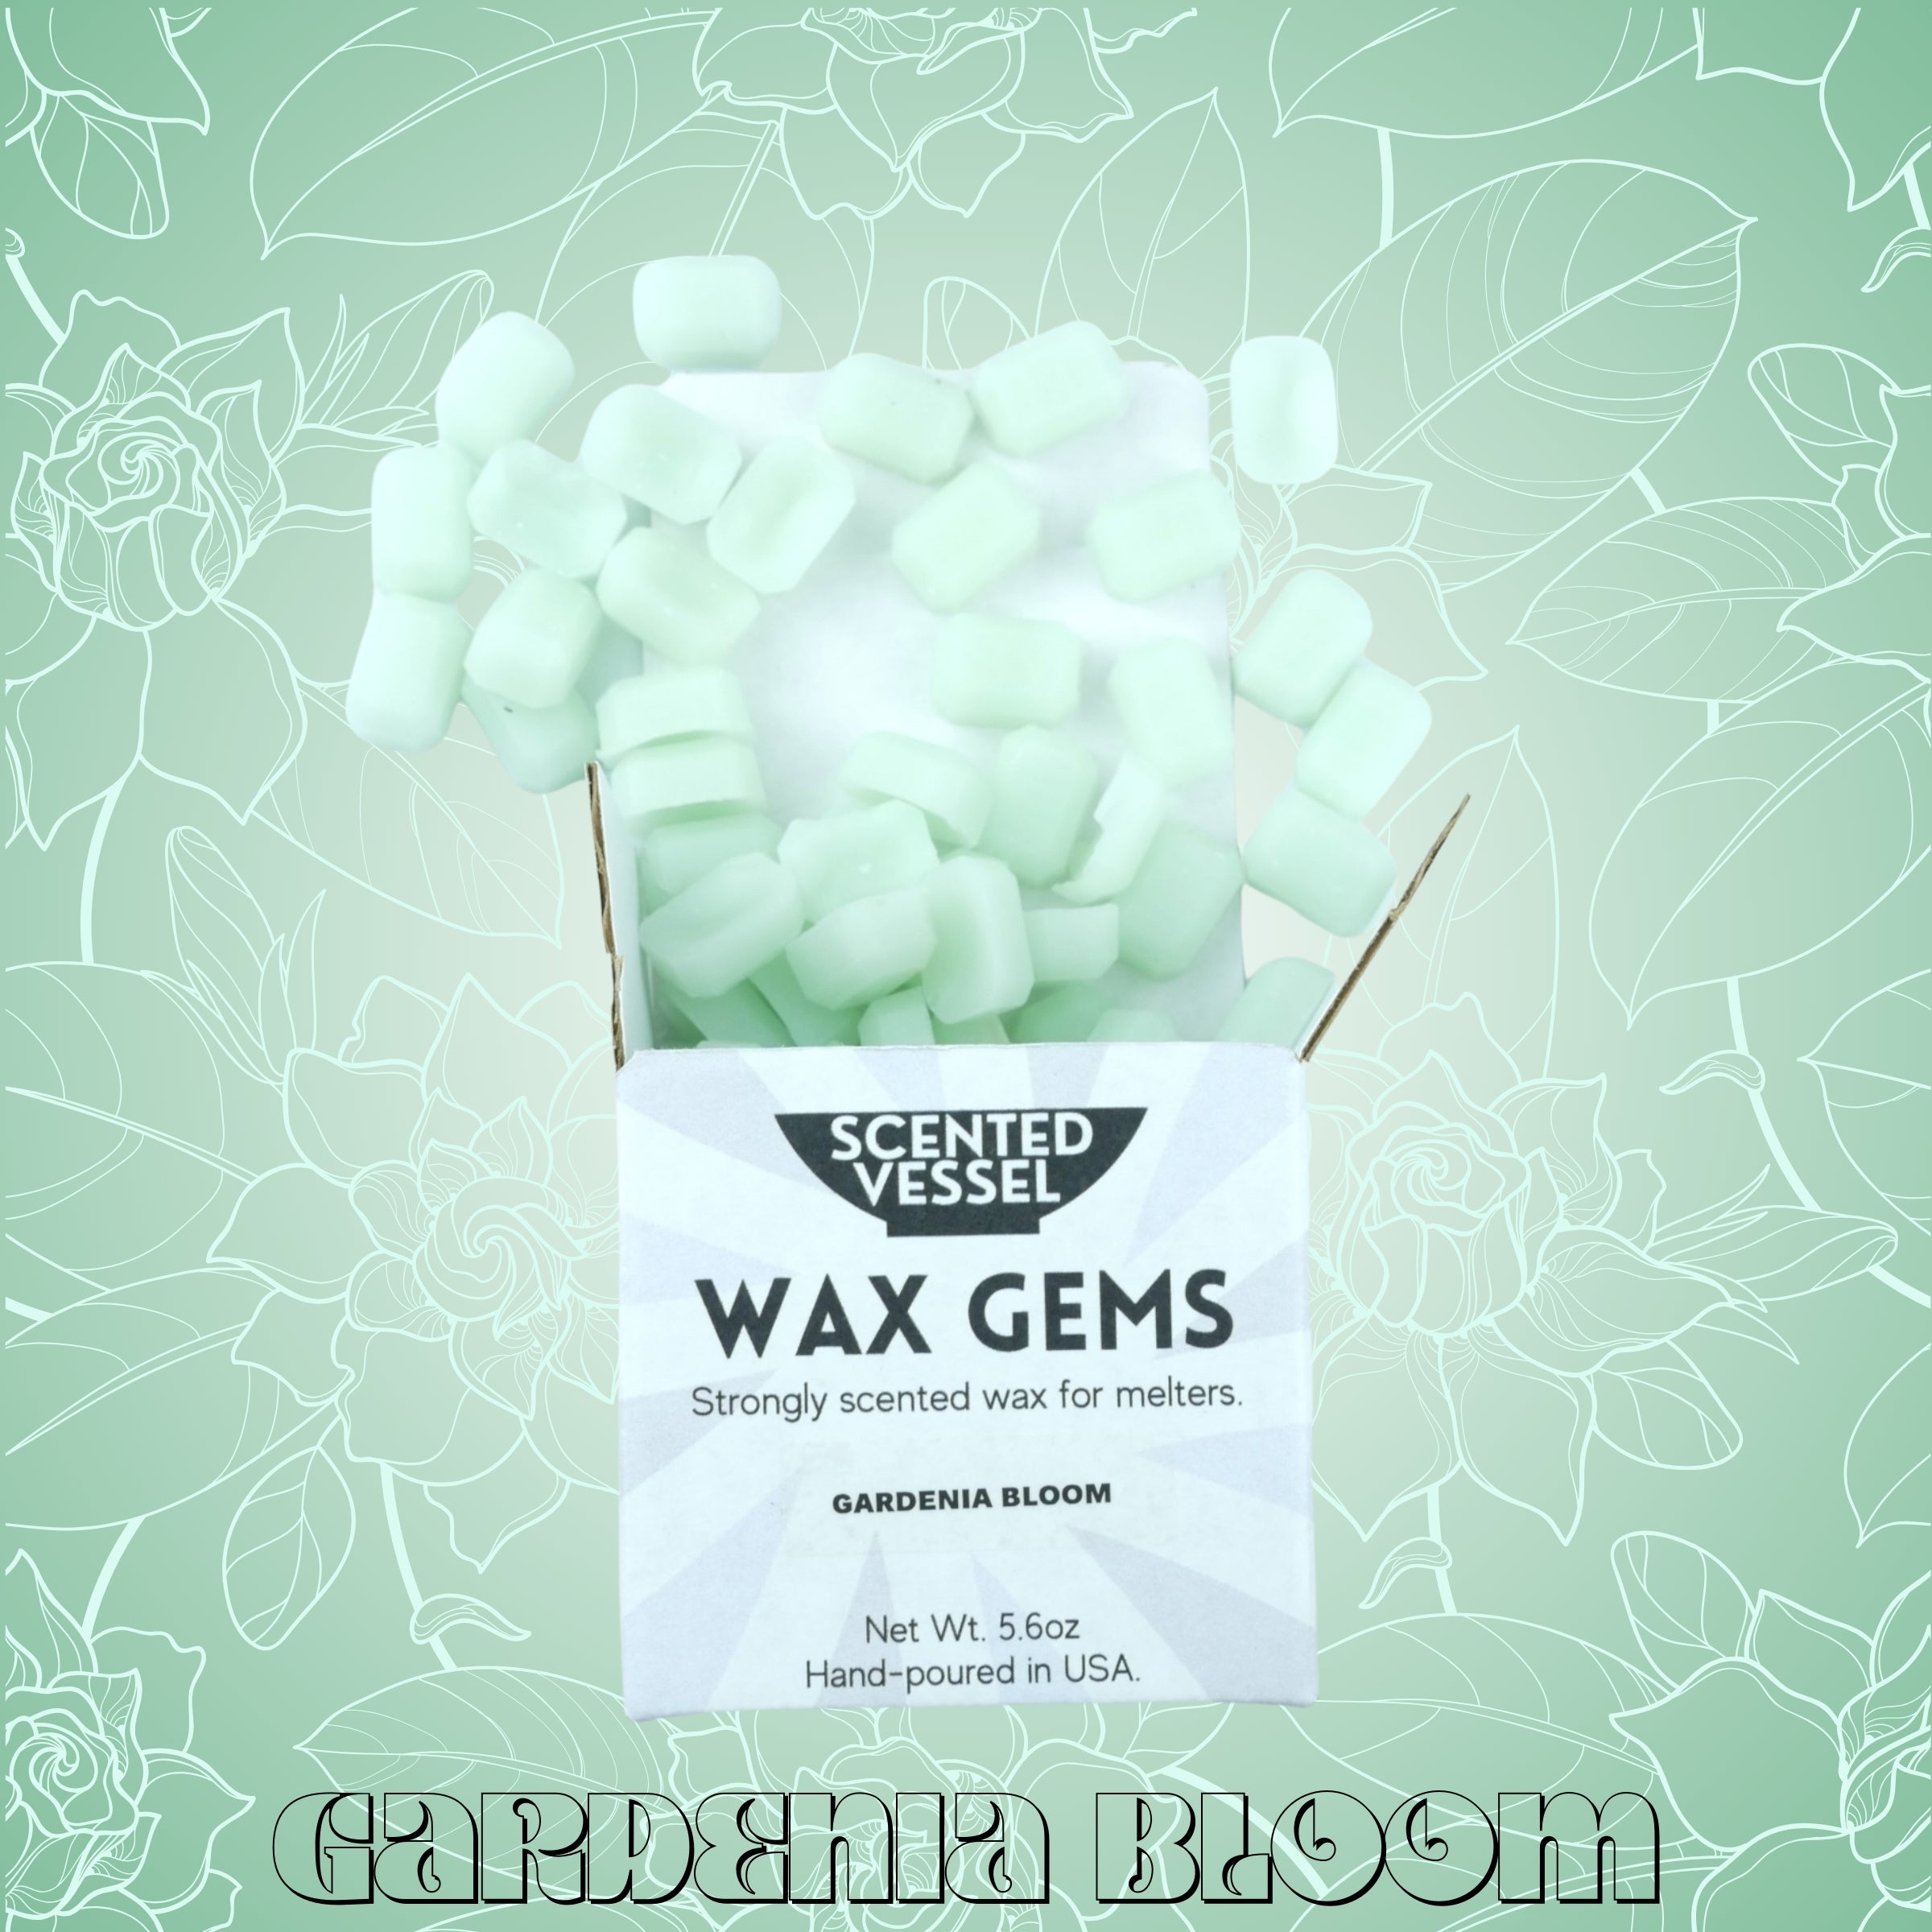 Gardenia Bloom 5.6oz Wax Gems by Scented Vessel